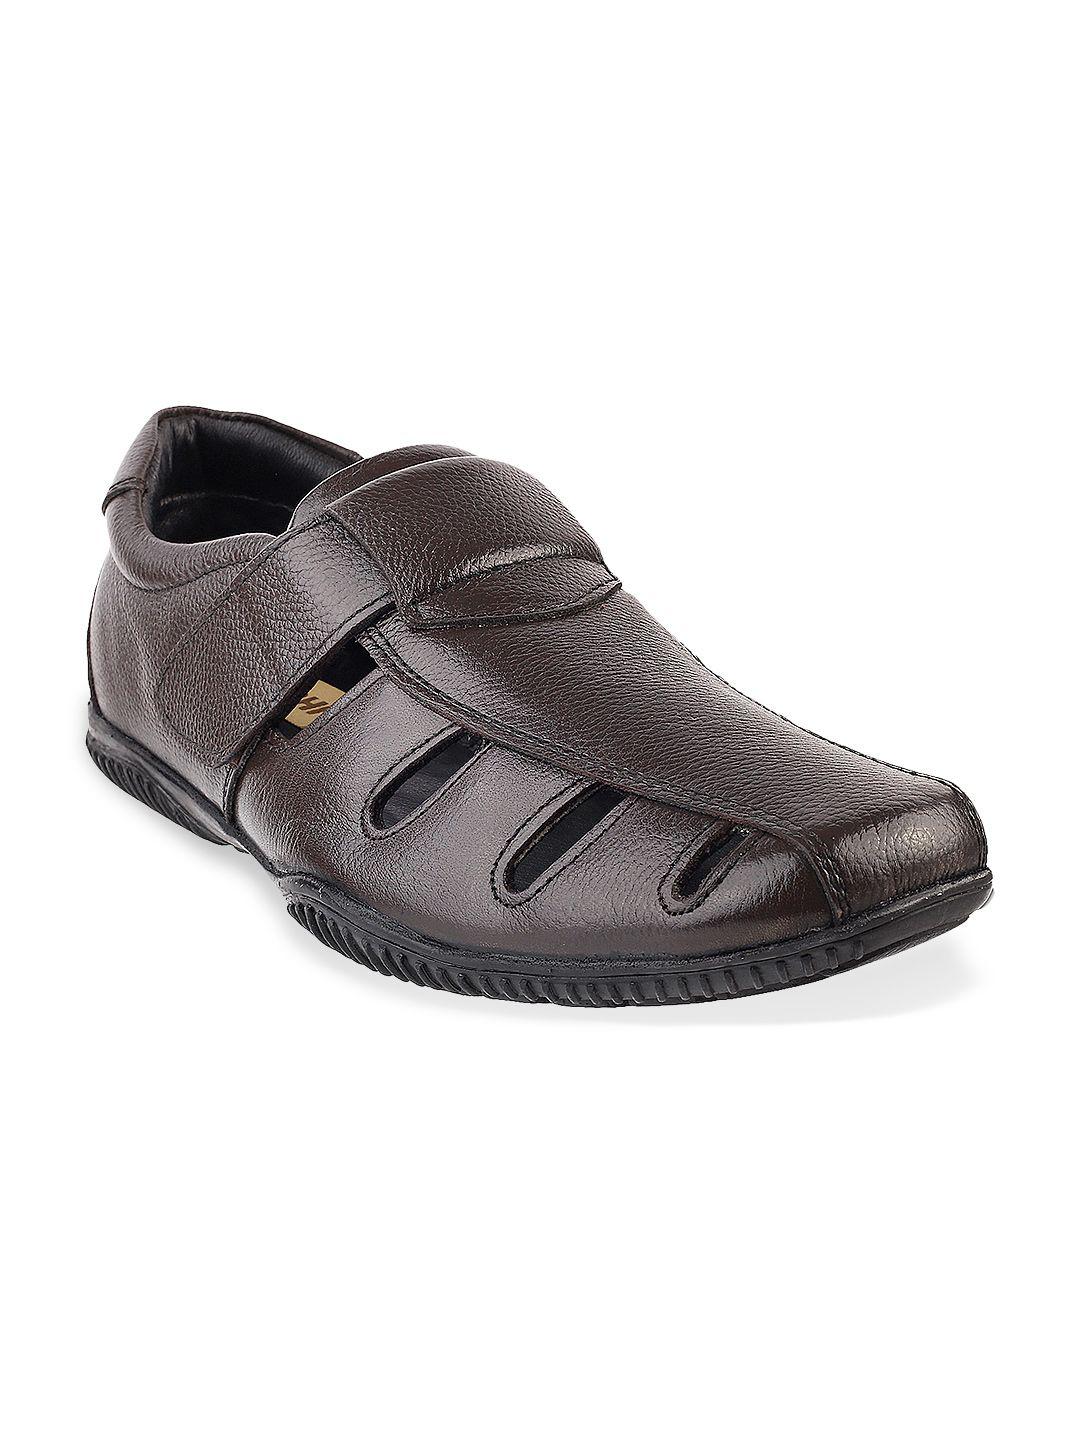 mochi men brown casual shoes